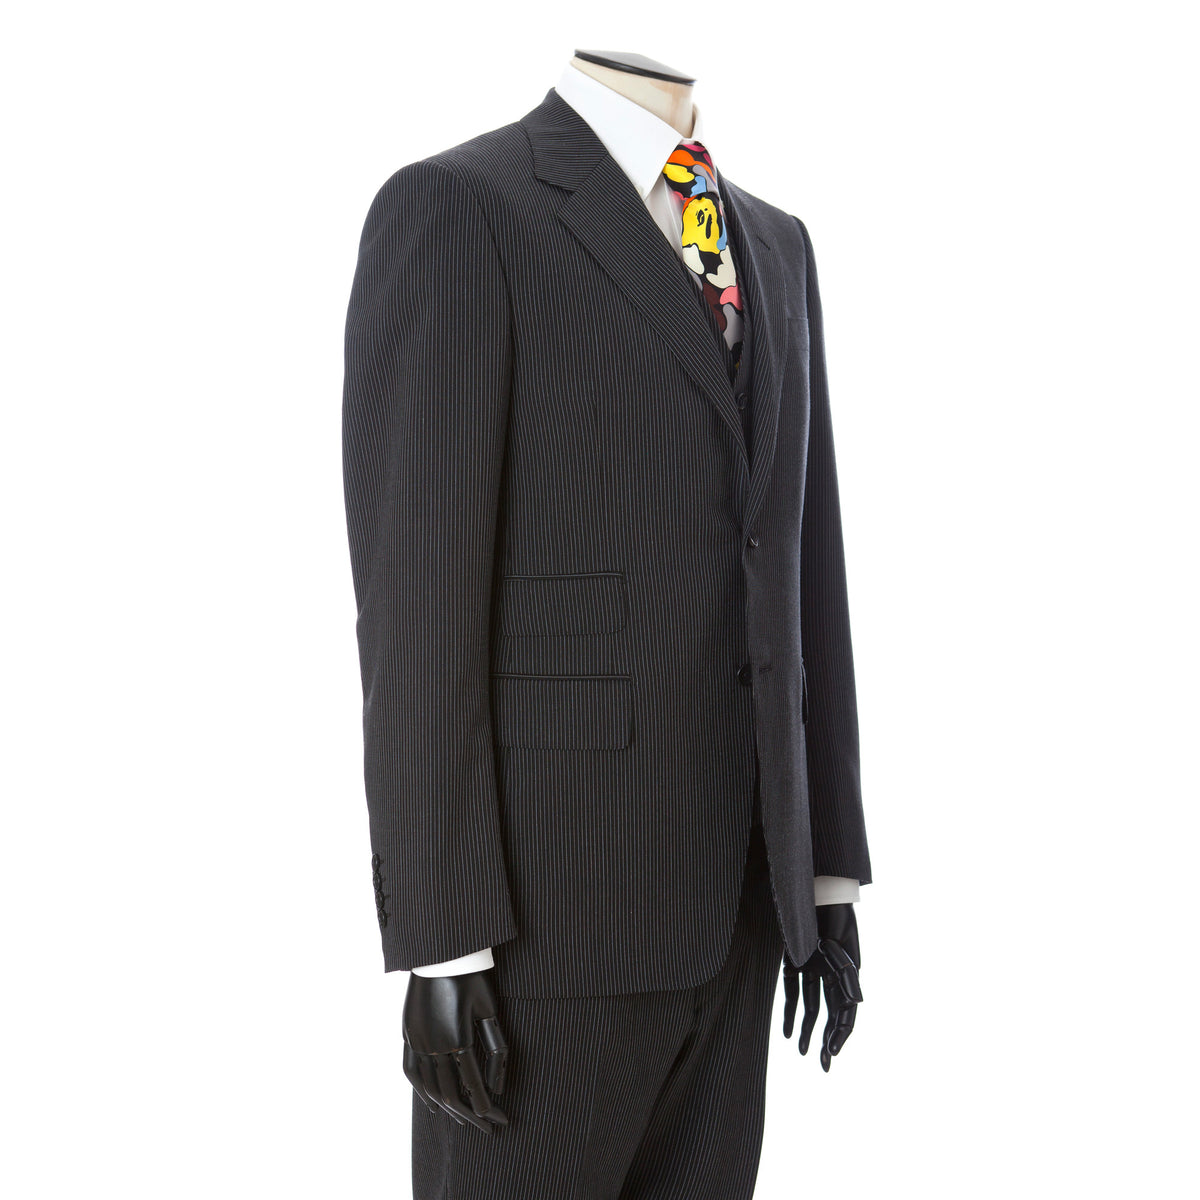 Mr. Bathing Ape Pin Stripe Classic British 3pcs Suit Black - Concrete